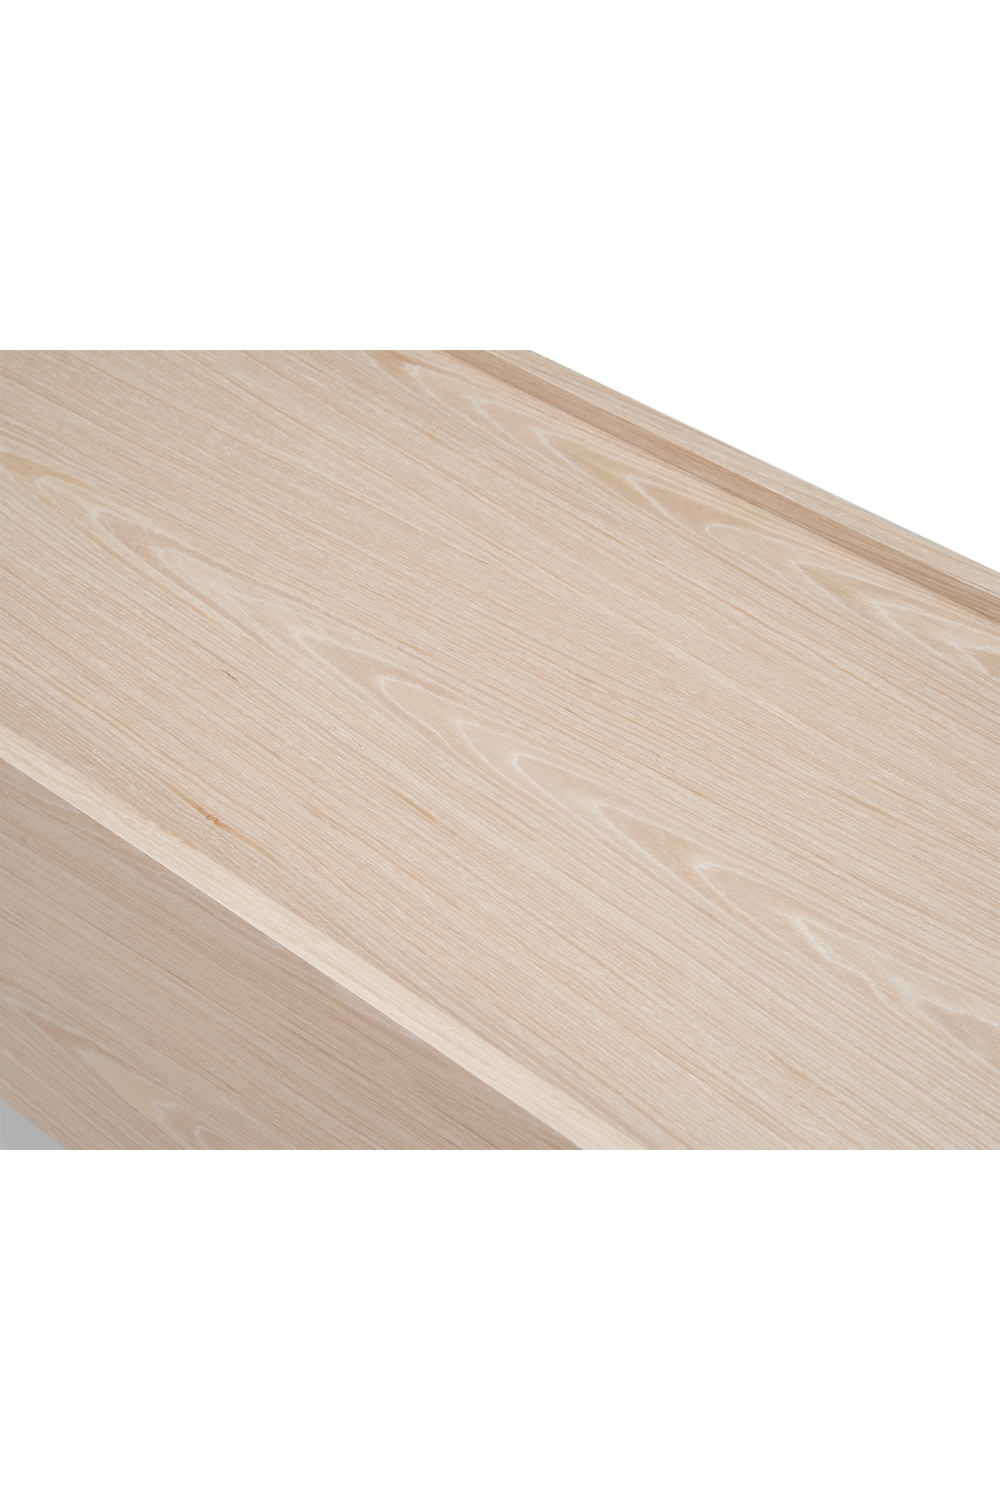 Wood 2-Drawer Media Sideboard | Liang & Eimil Butka | Oroa.com